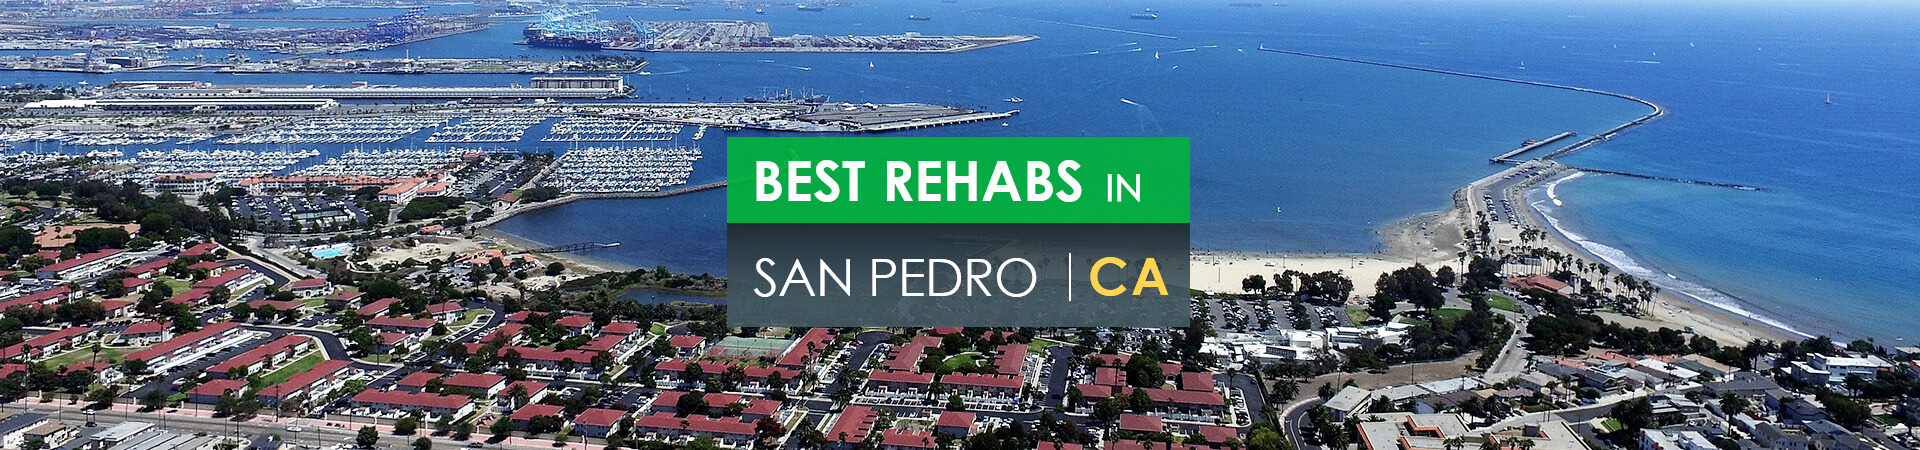 Best rehabs in San Pedro, CA